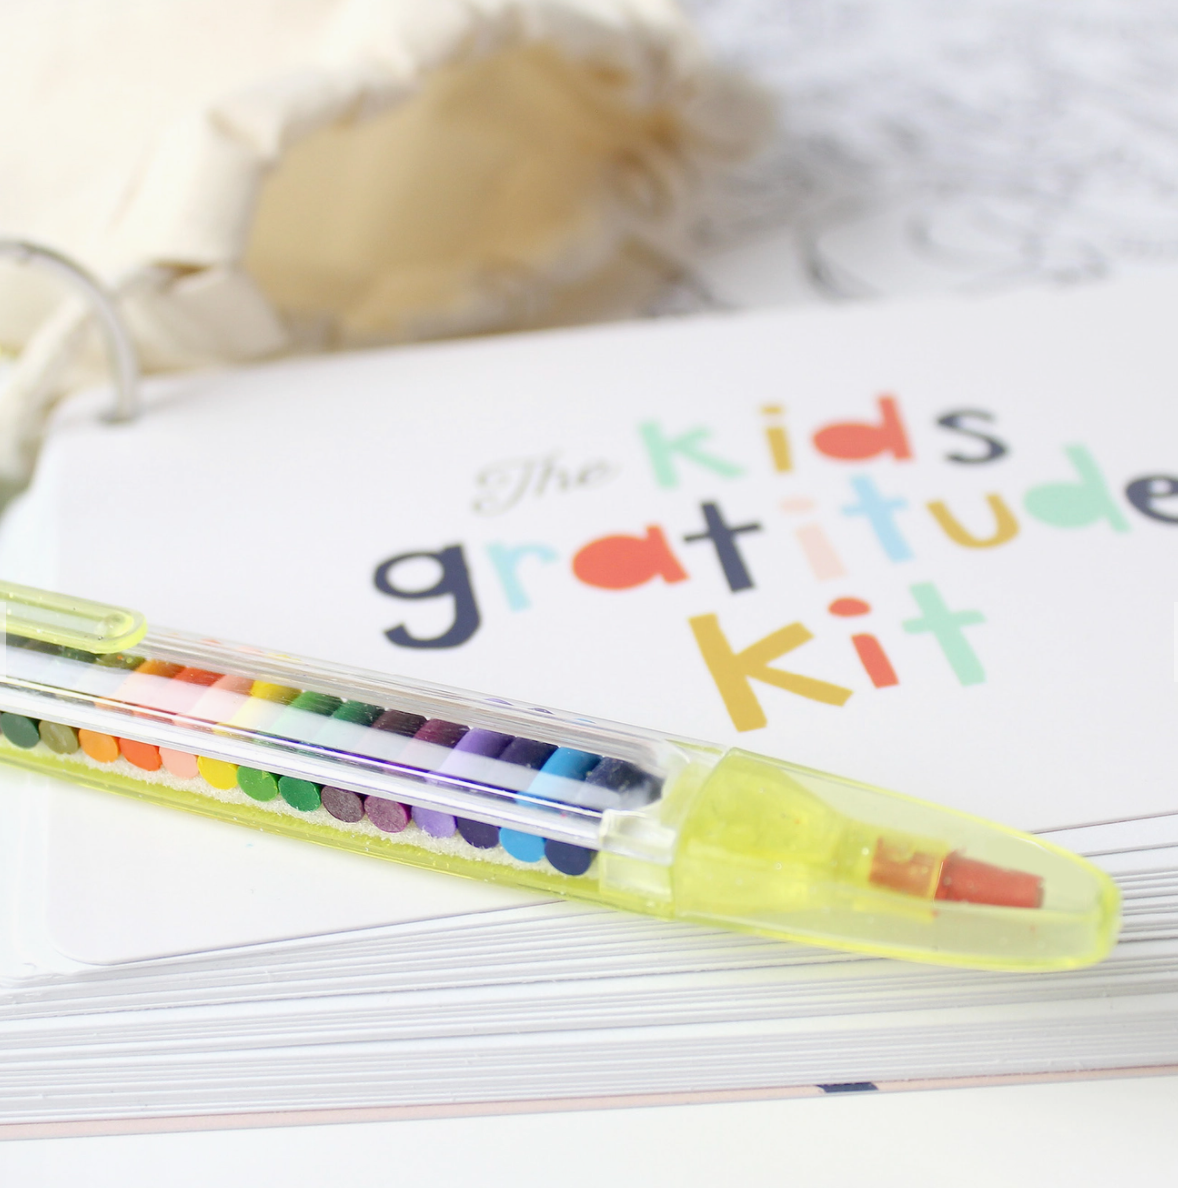 The Kids Gratitude Kit